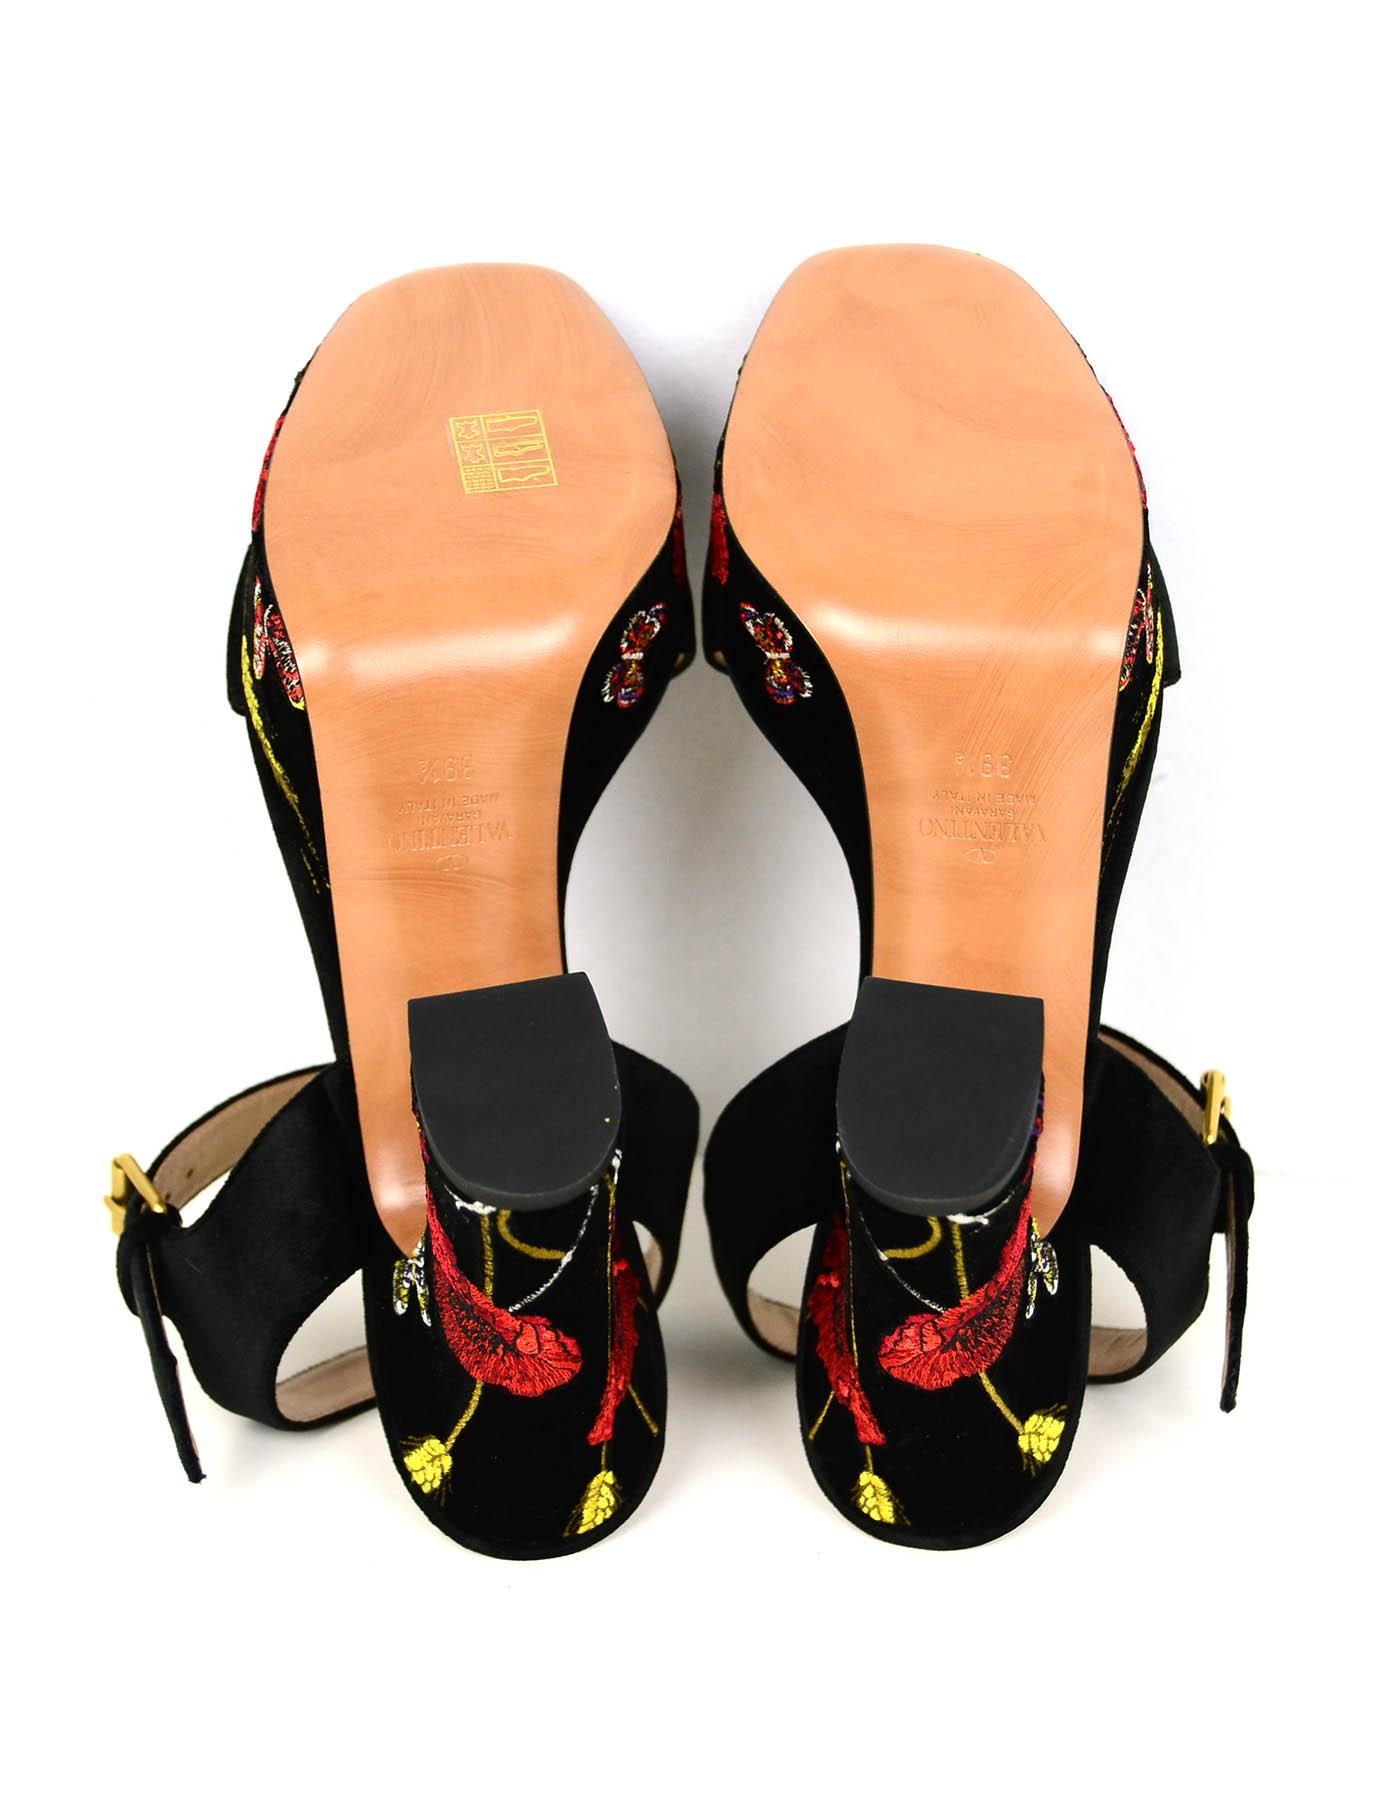 Valentino NEW Black Velvet Floral Embroidered Ankle Strap Sandals Sz 39 rt $1095 1